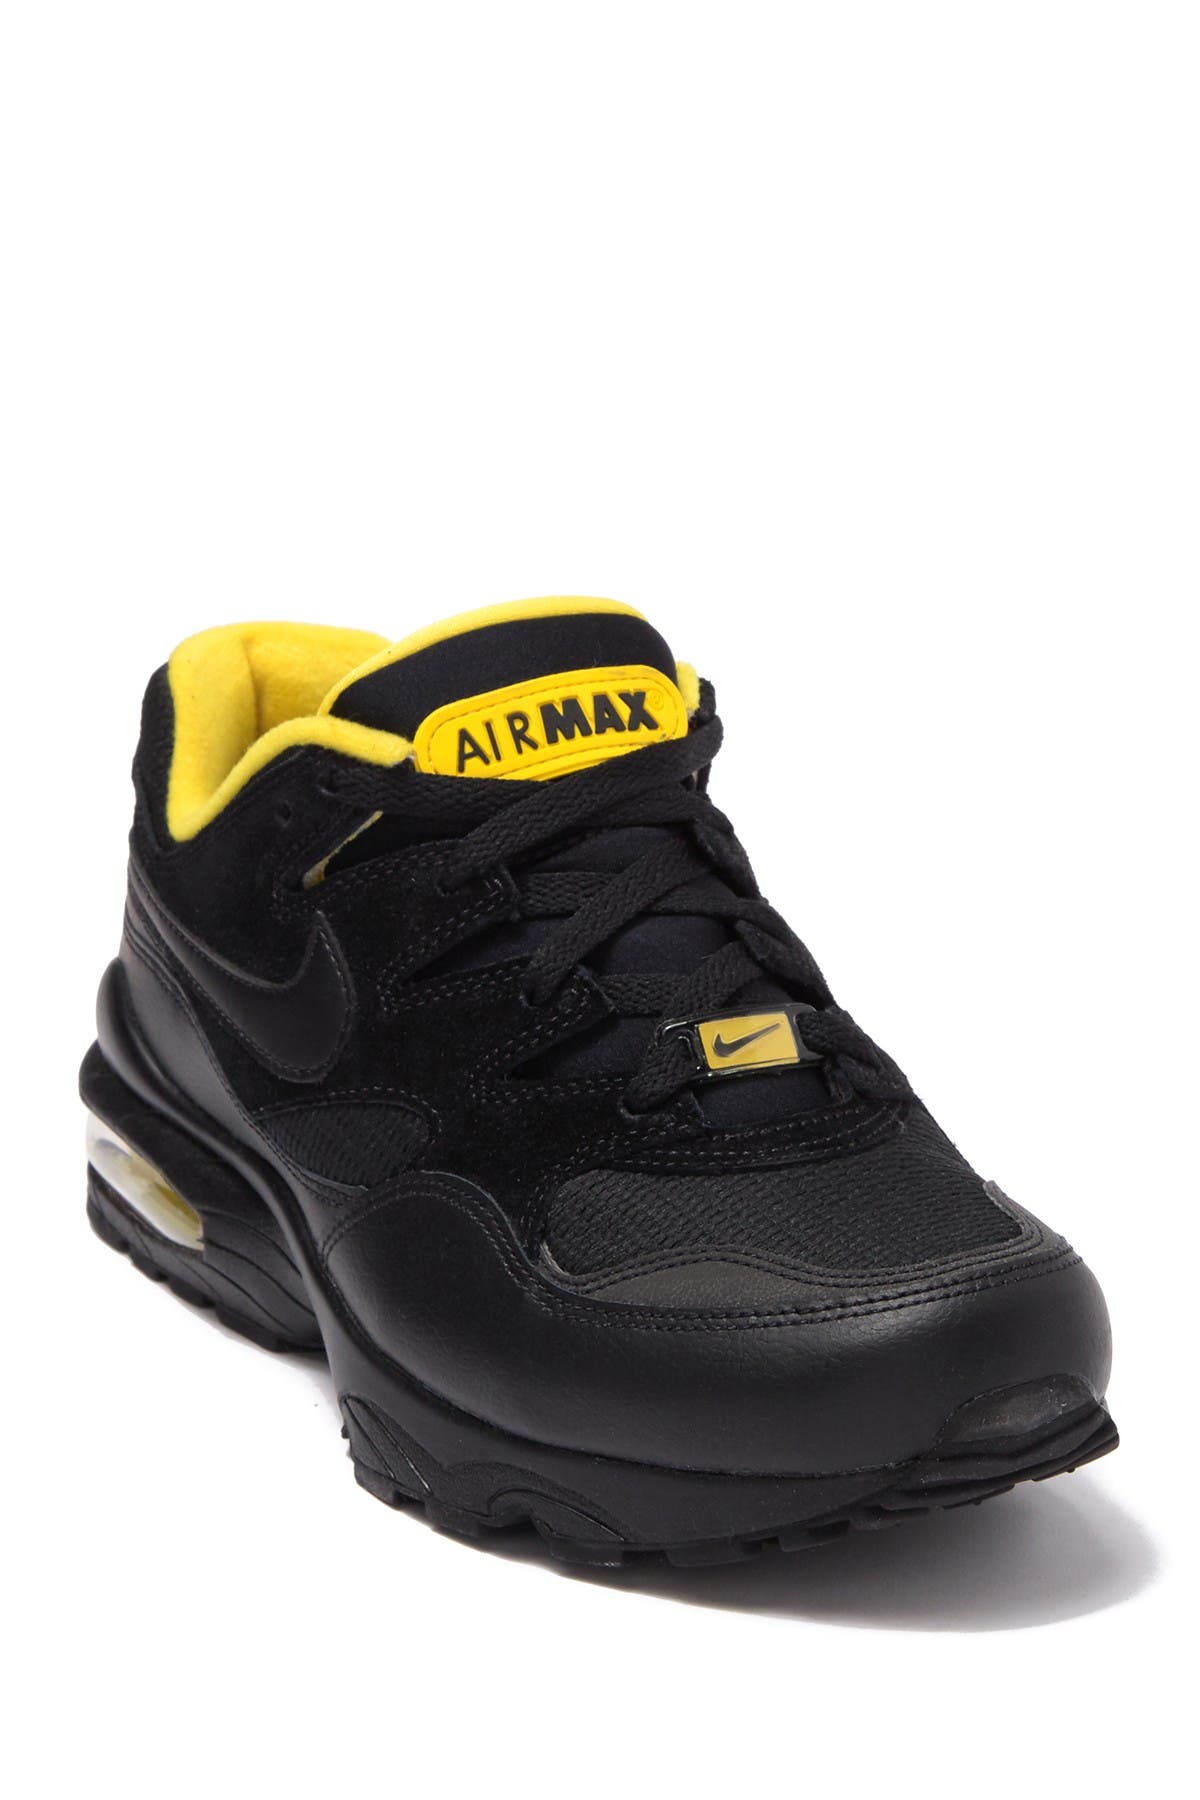 air max 94 black yellow